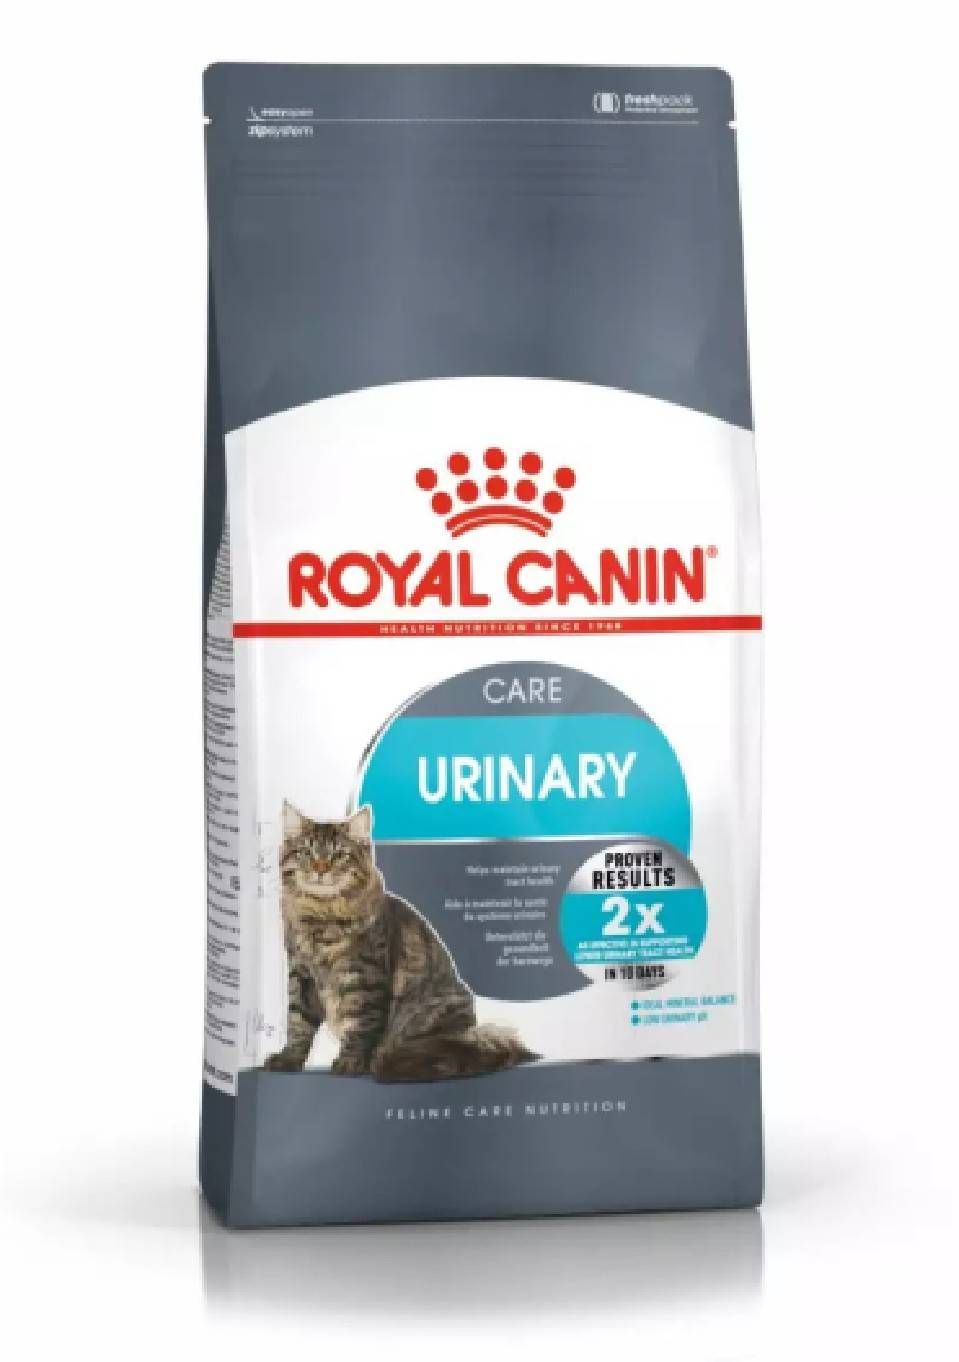 Royal Canin Urinary Care อาหารแมวโต ดูแลระบบทางเดินปัสสาวะ400g